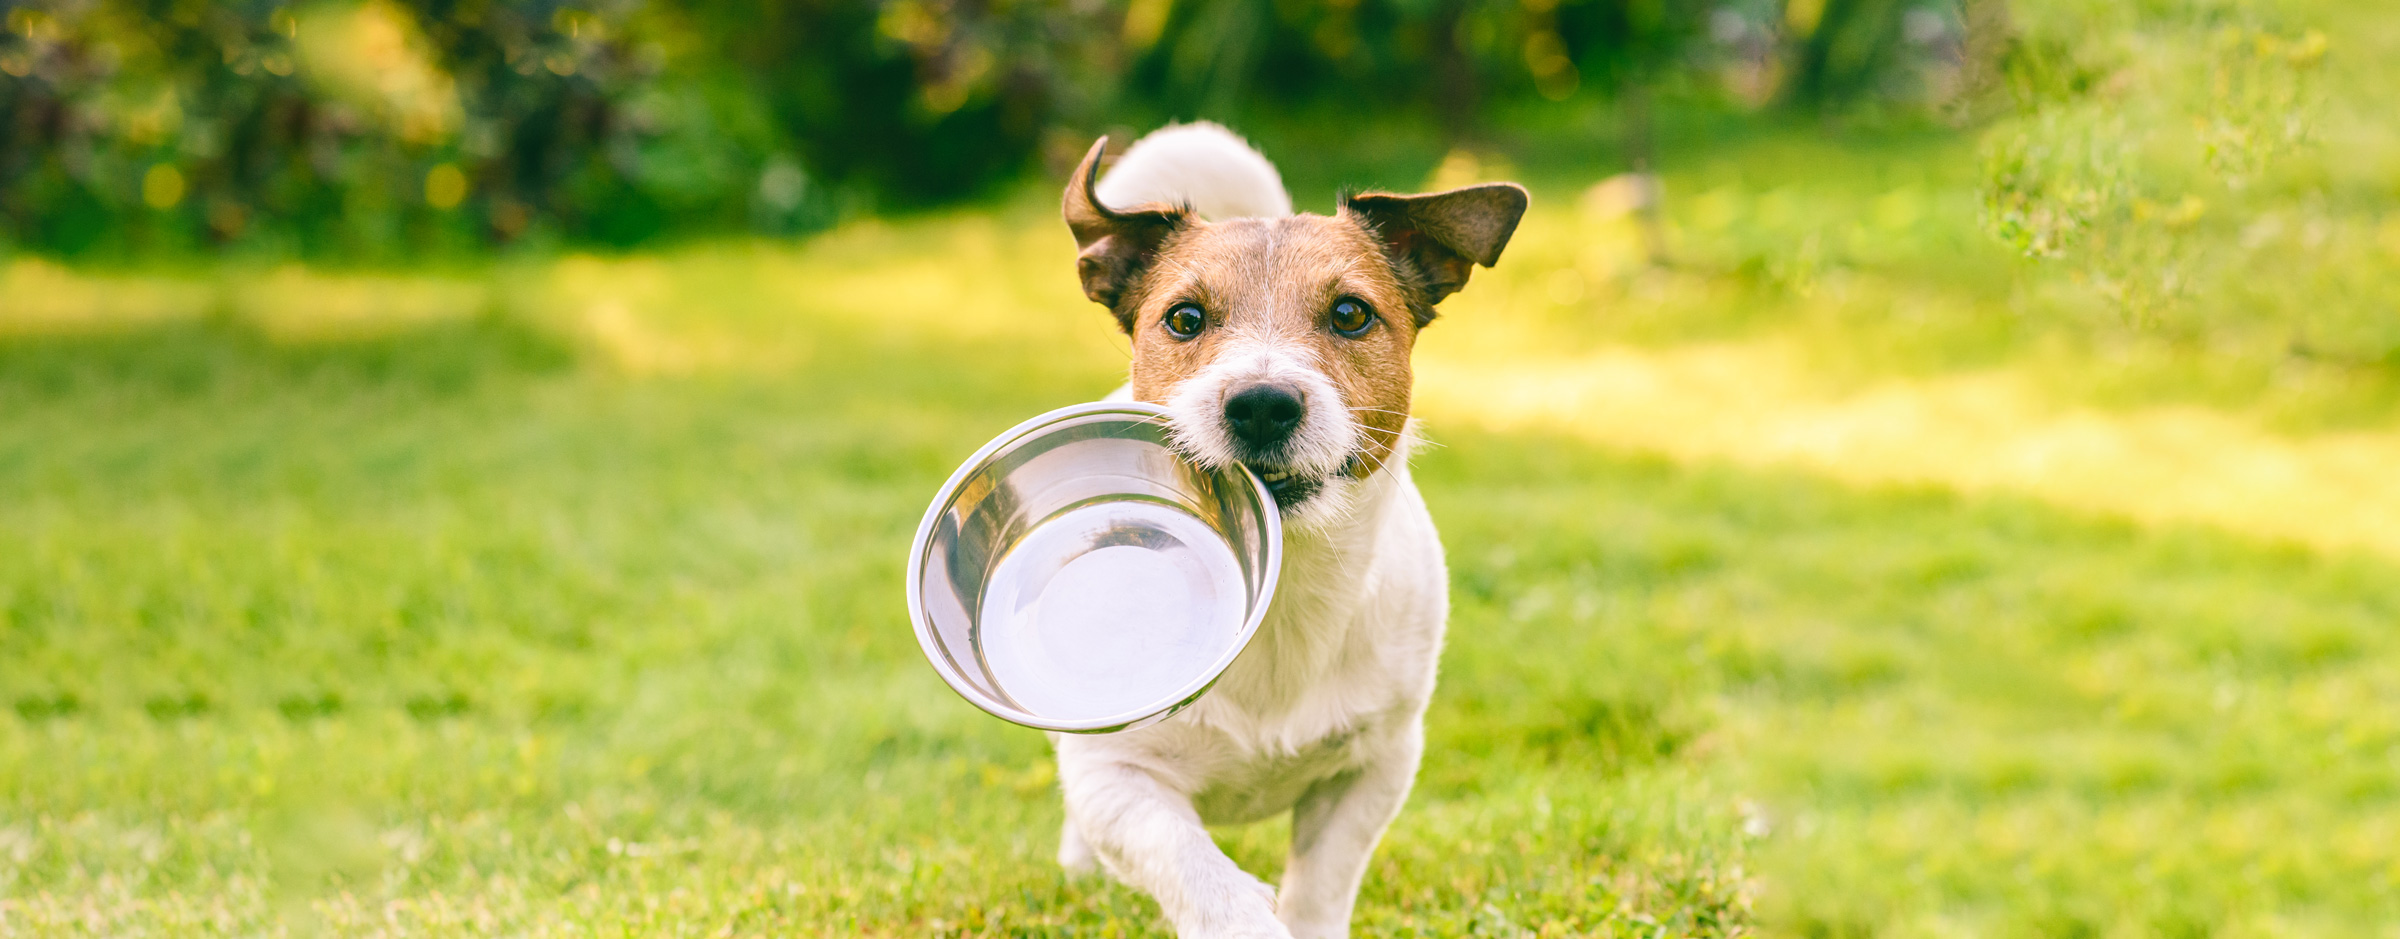 Dog-run-with-food-bowl-HERO